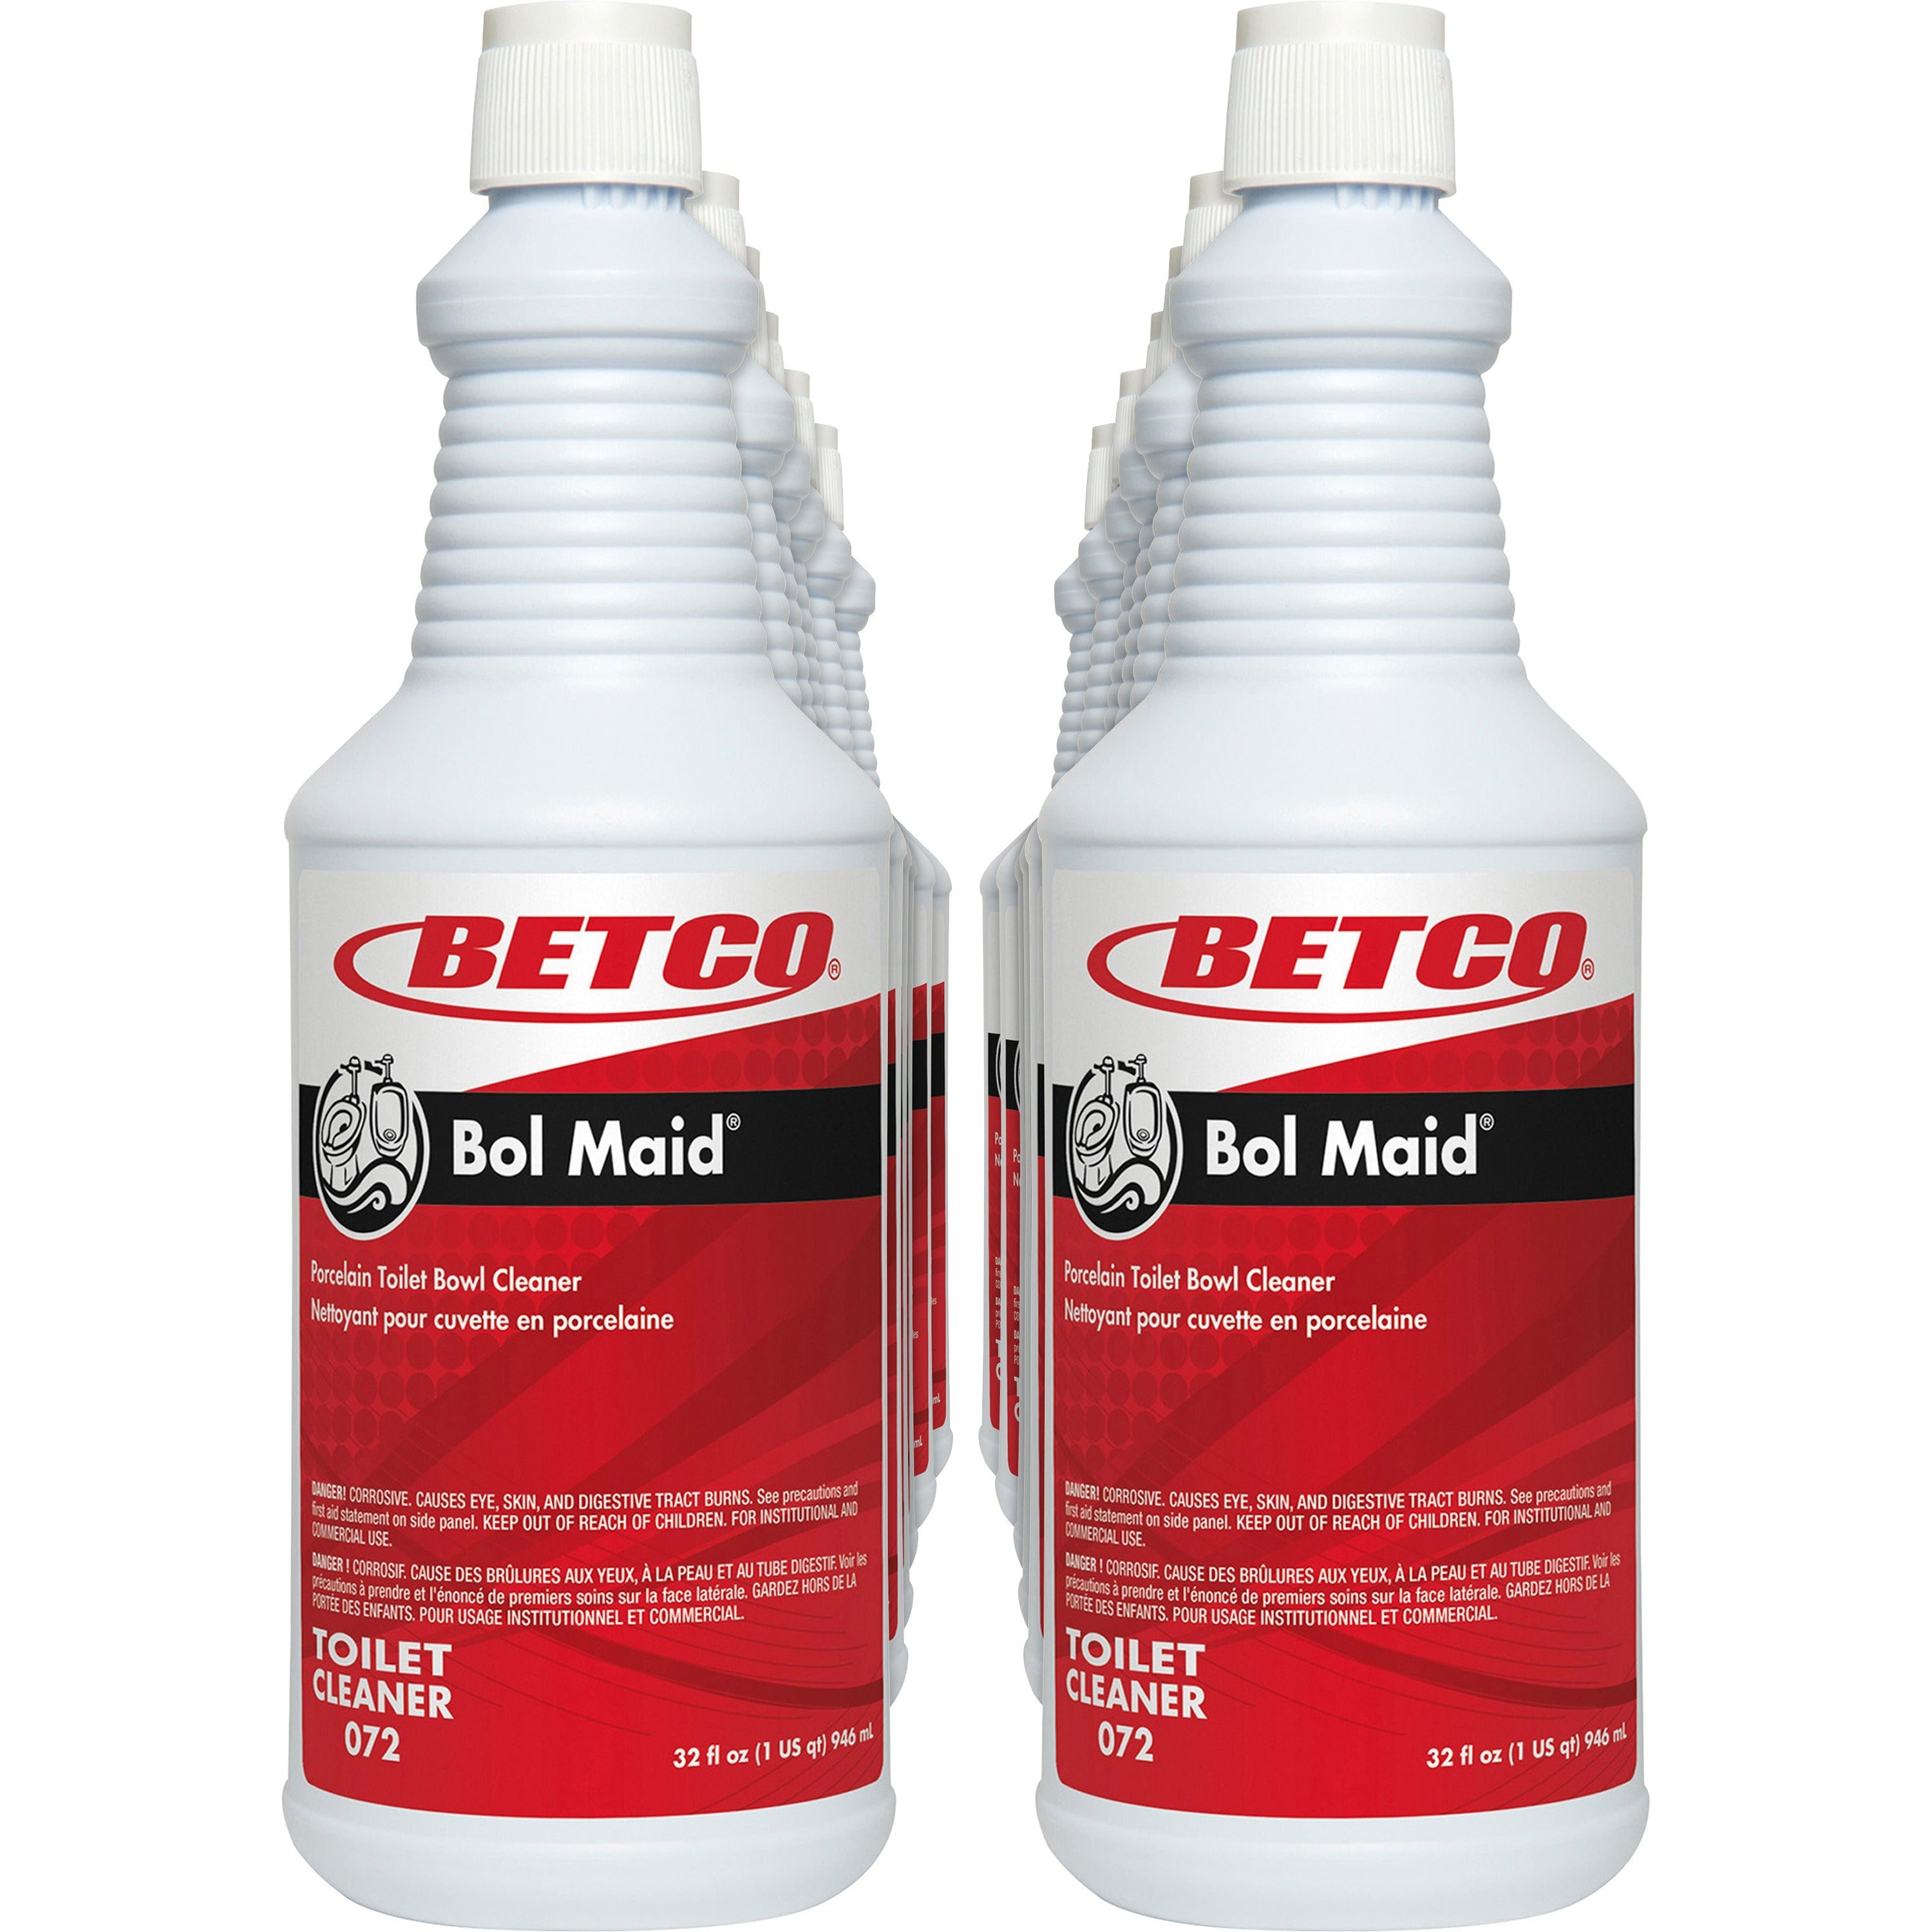 betco-bol-maid-toilet-cleaner-mint-scent-1-quart-pack-of-12-ready-to-use-32-fl-oz-1-quart-3860-oz-241-lb-mint-scent-12-carton-blue_bet0721200 - 1